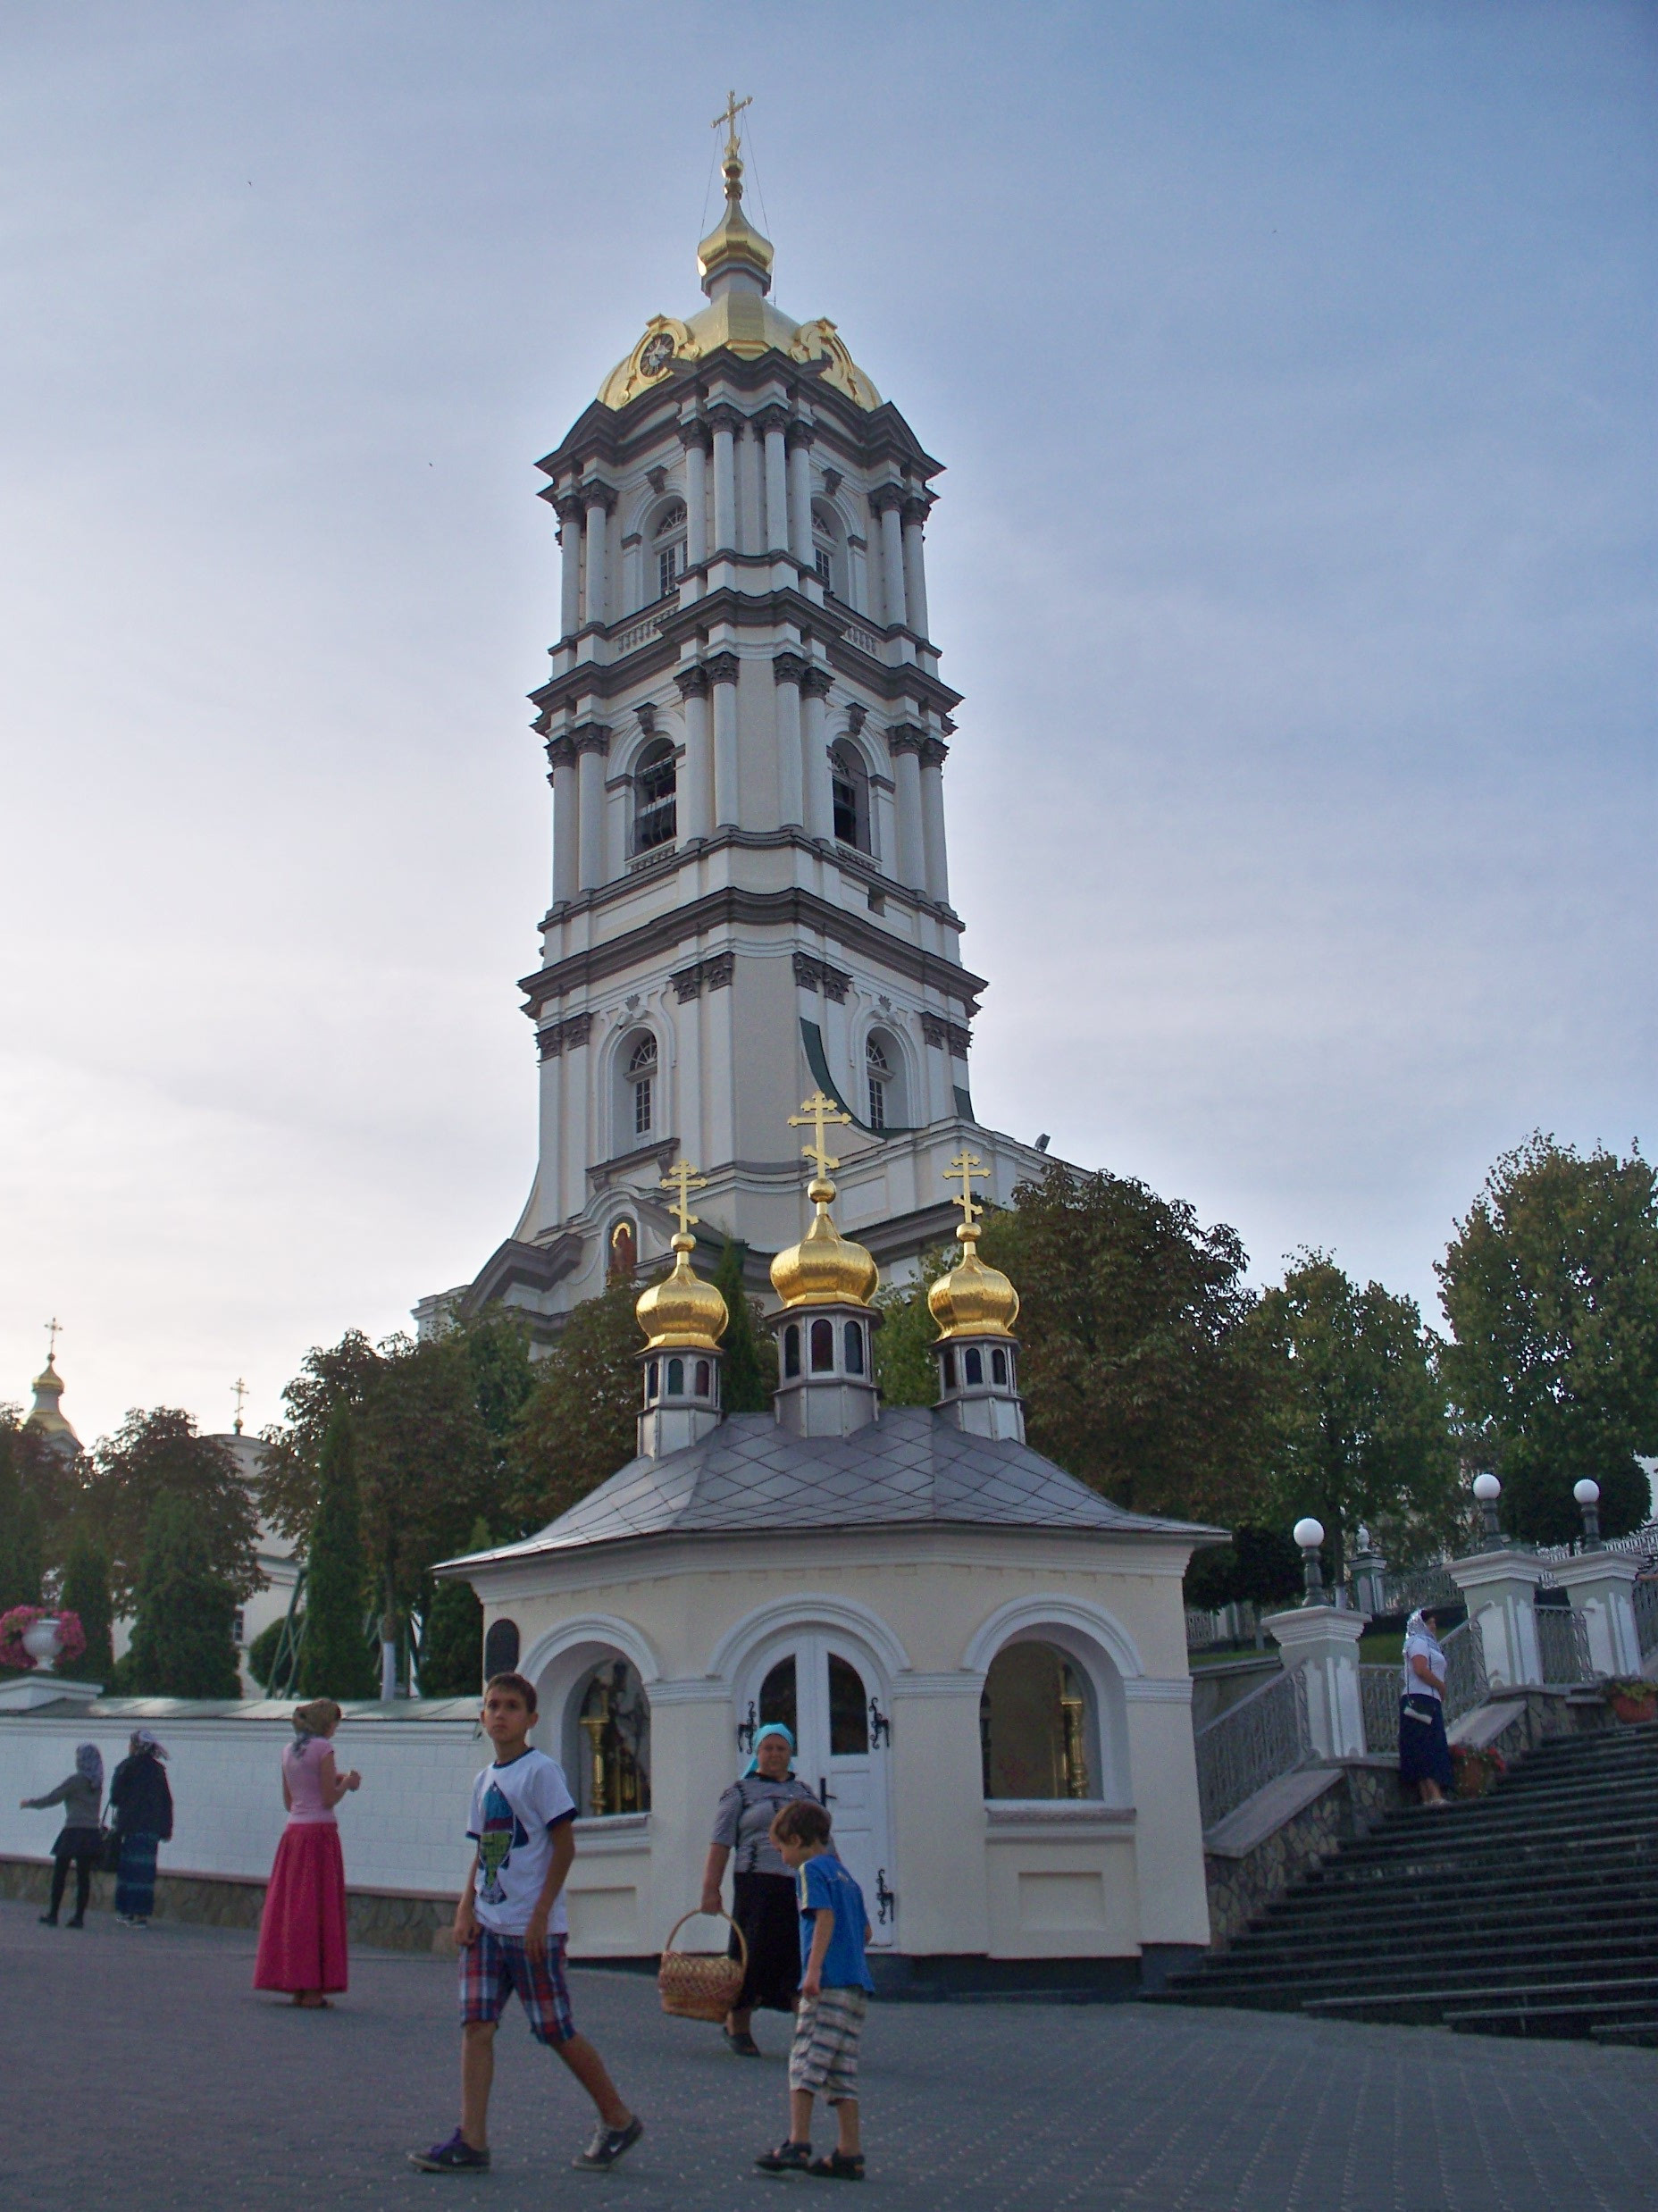 Pochaiv, Ukraine